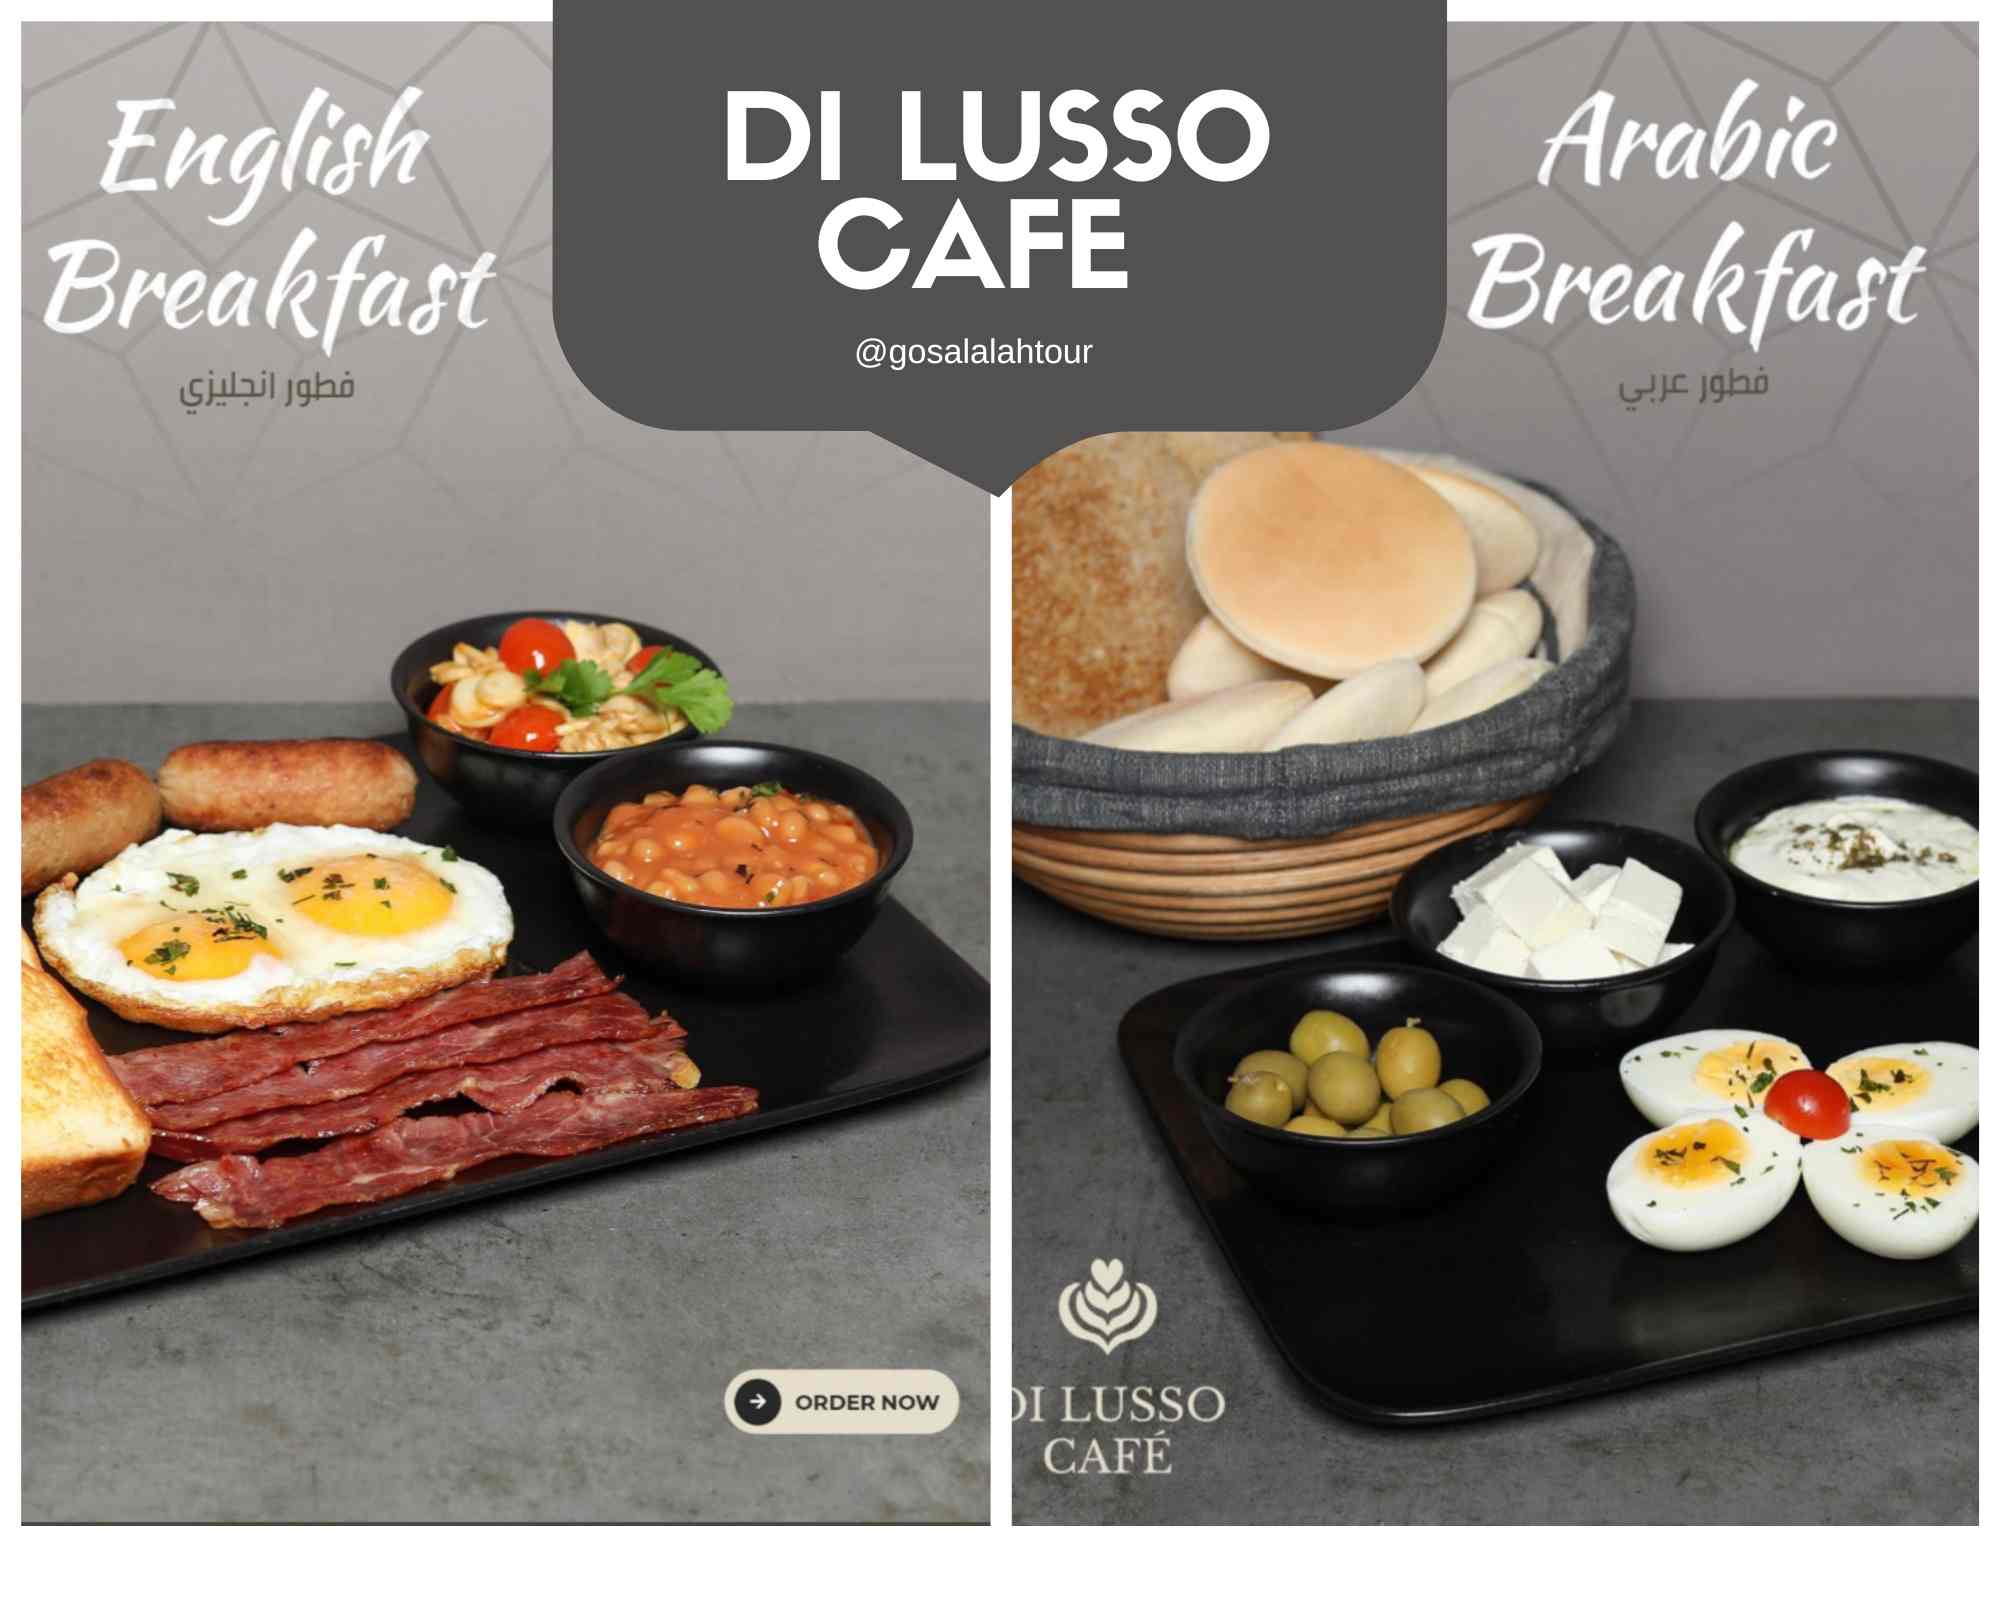 Di Lusso Cafe Breakfast